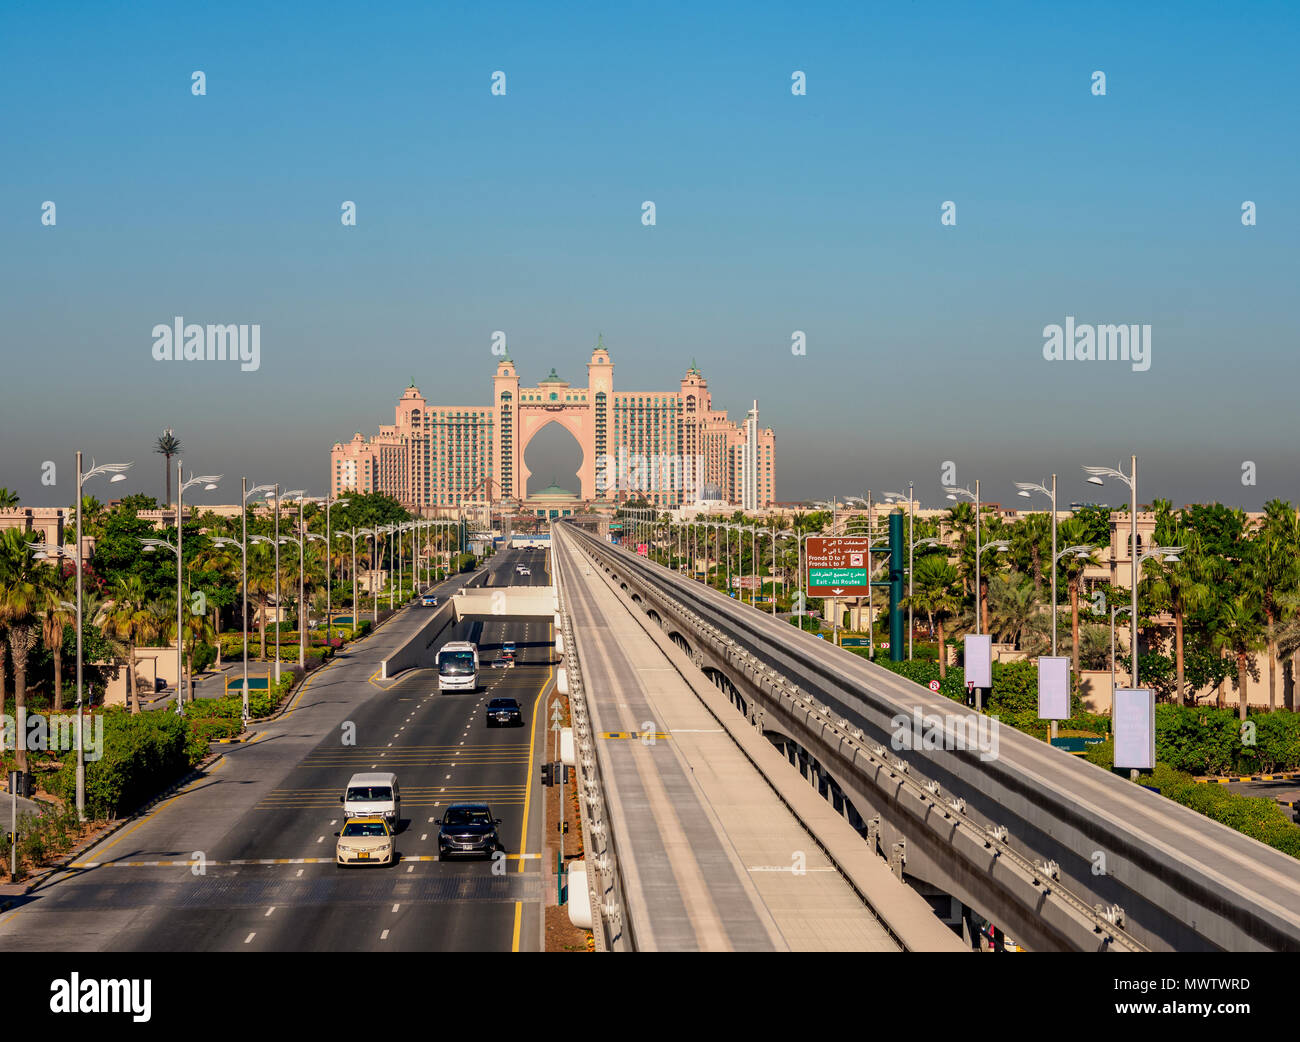 Monorail to Atlantis The Palm Luxury Hotel, Palm Jumeirah artificial island, Dubai, United Arab Emirates, Middle East Stock Photo